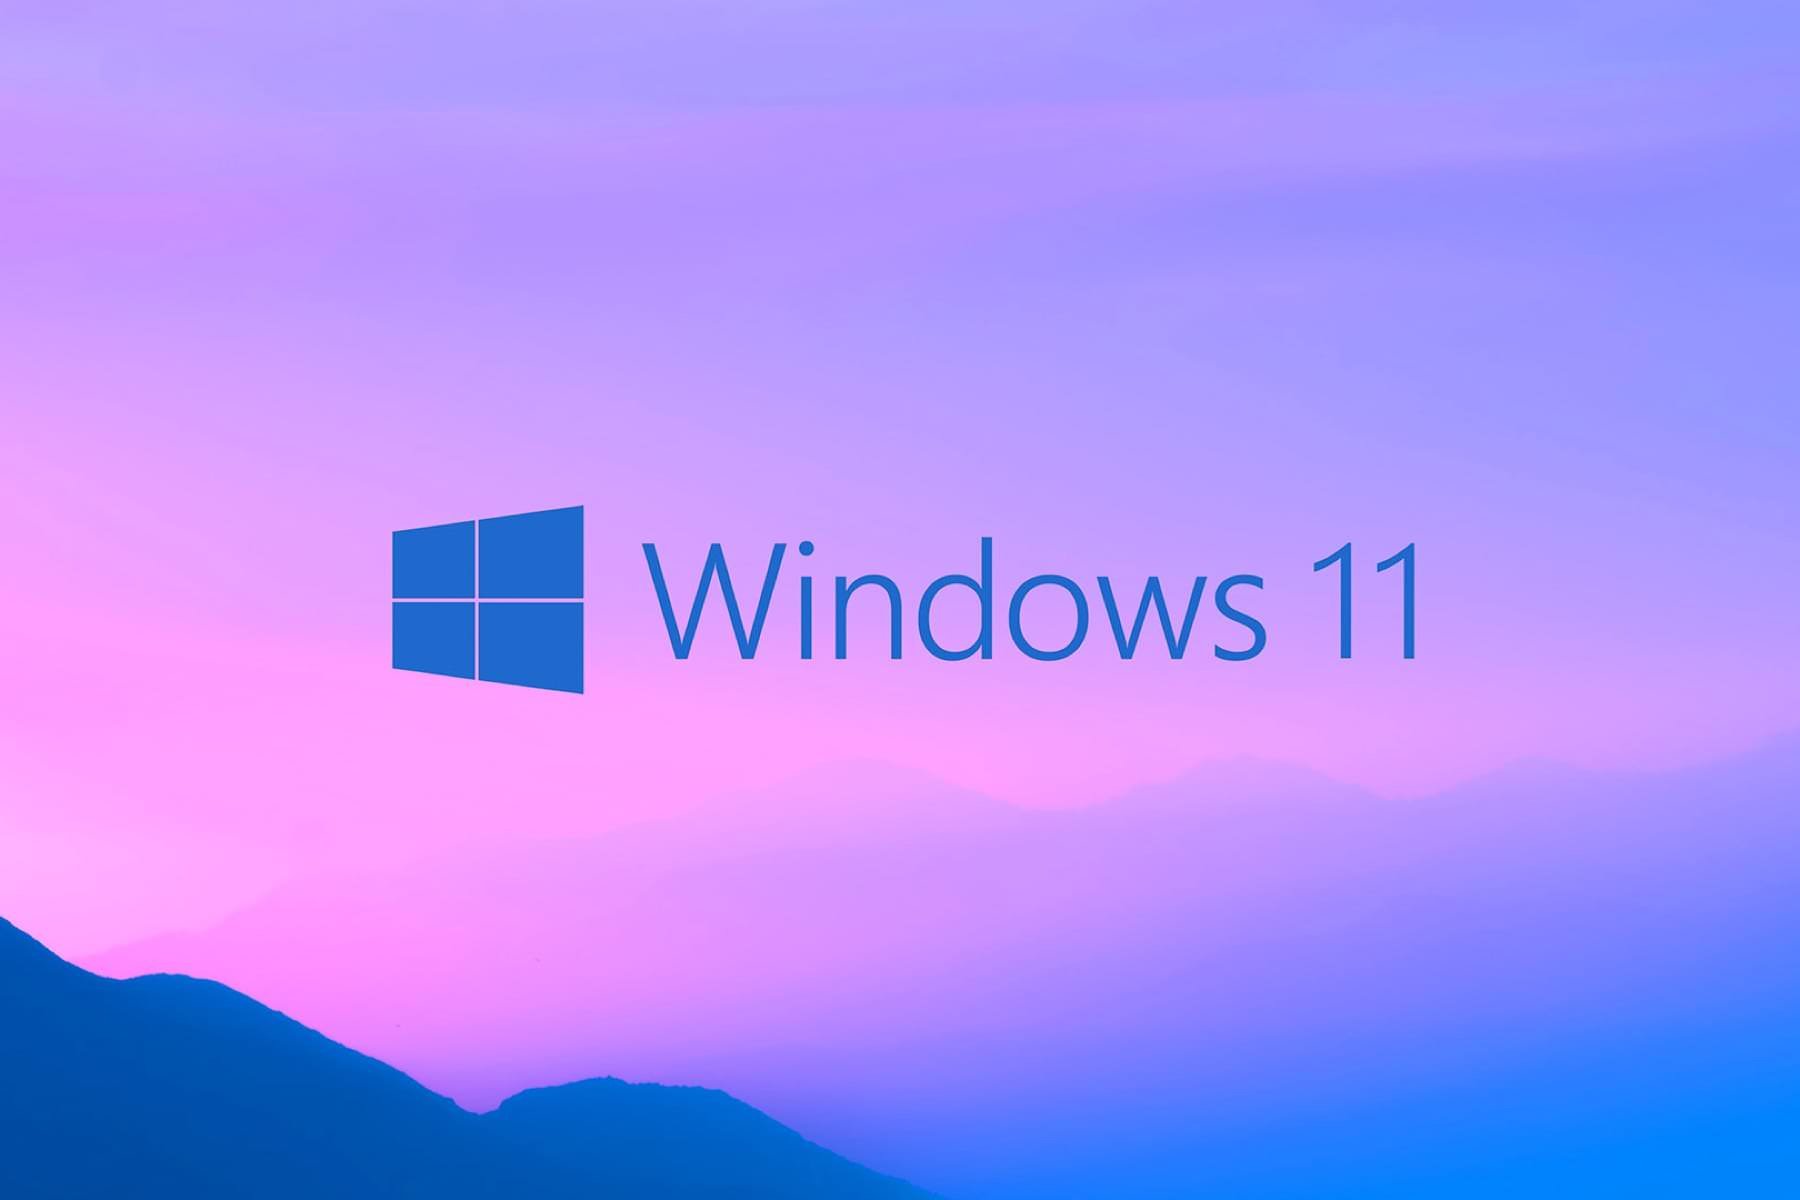 Windows 11 will get rid of preinstalled programs